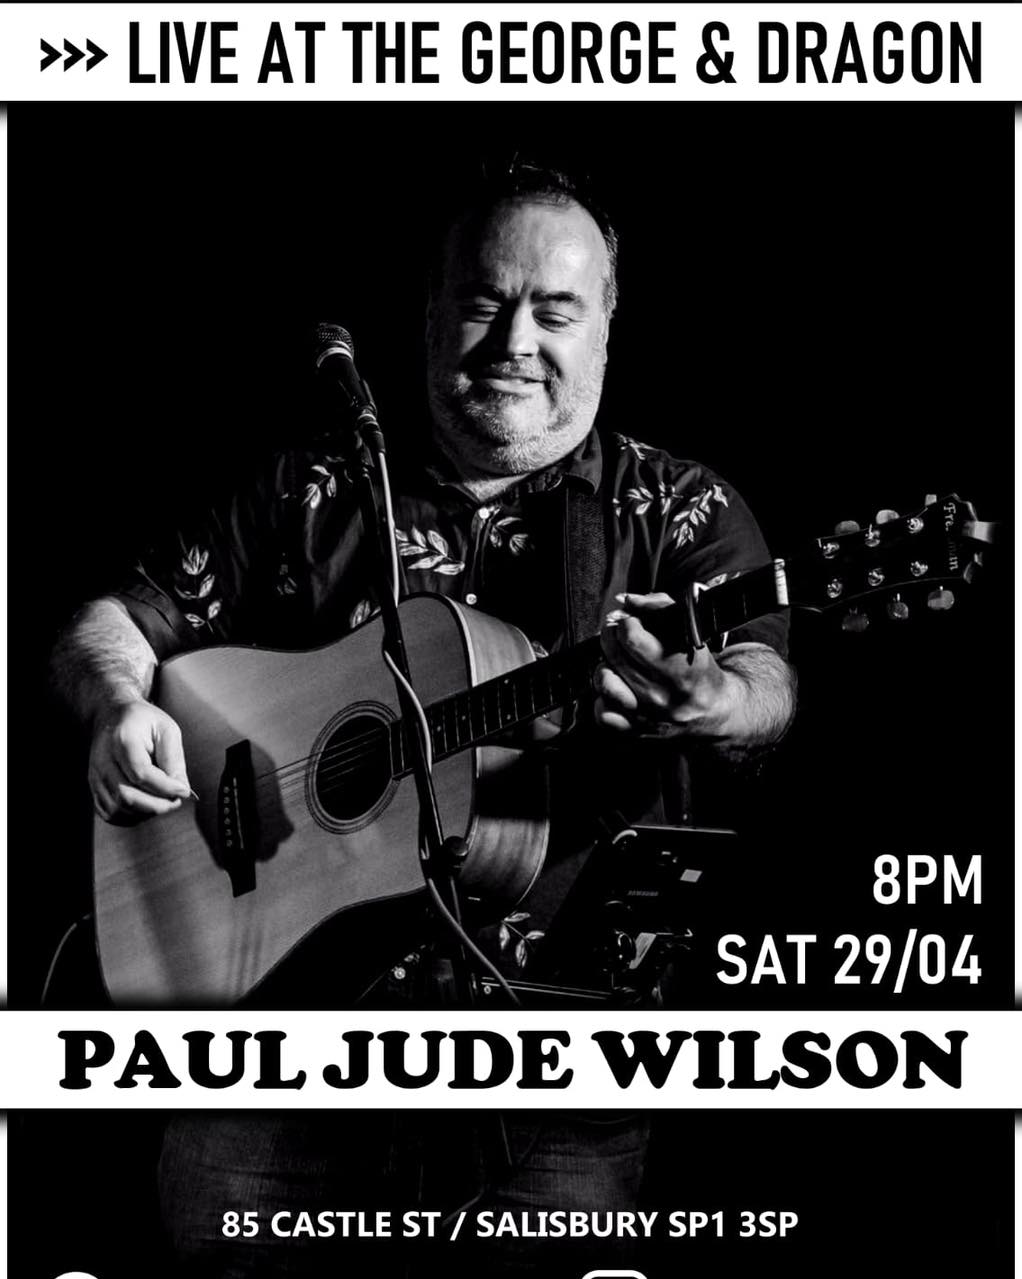 Paul Jude Wilson